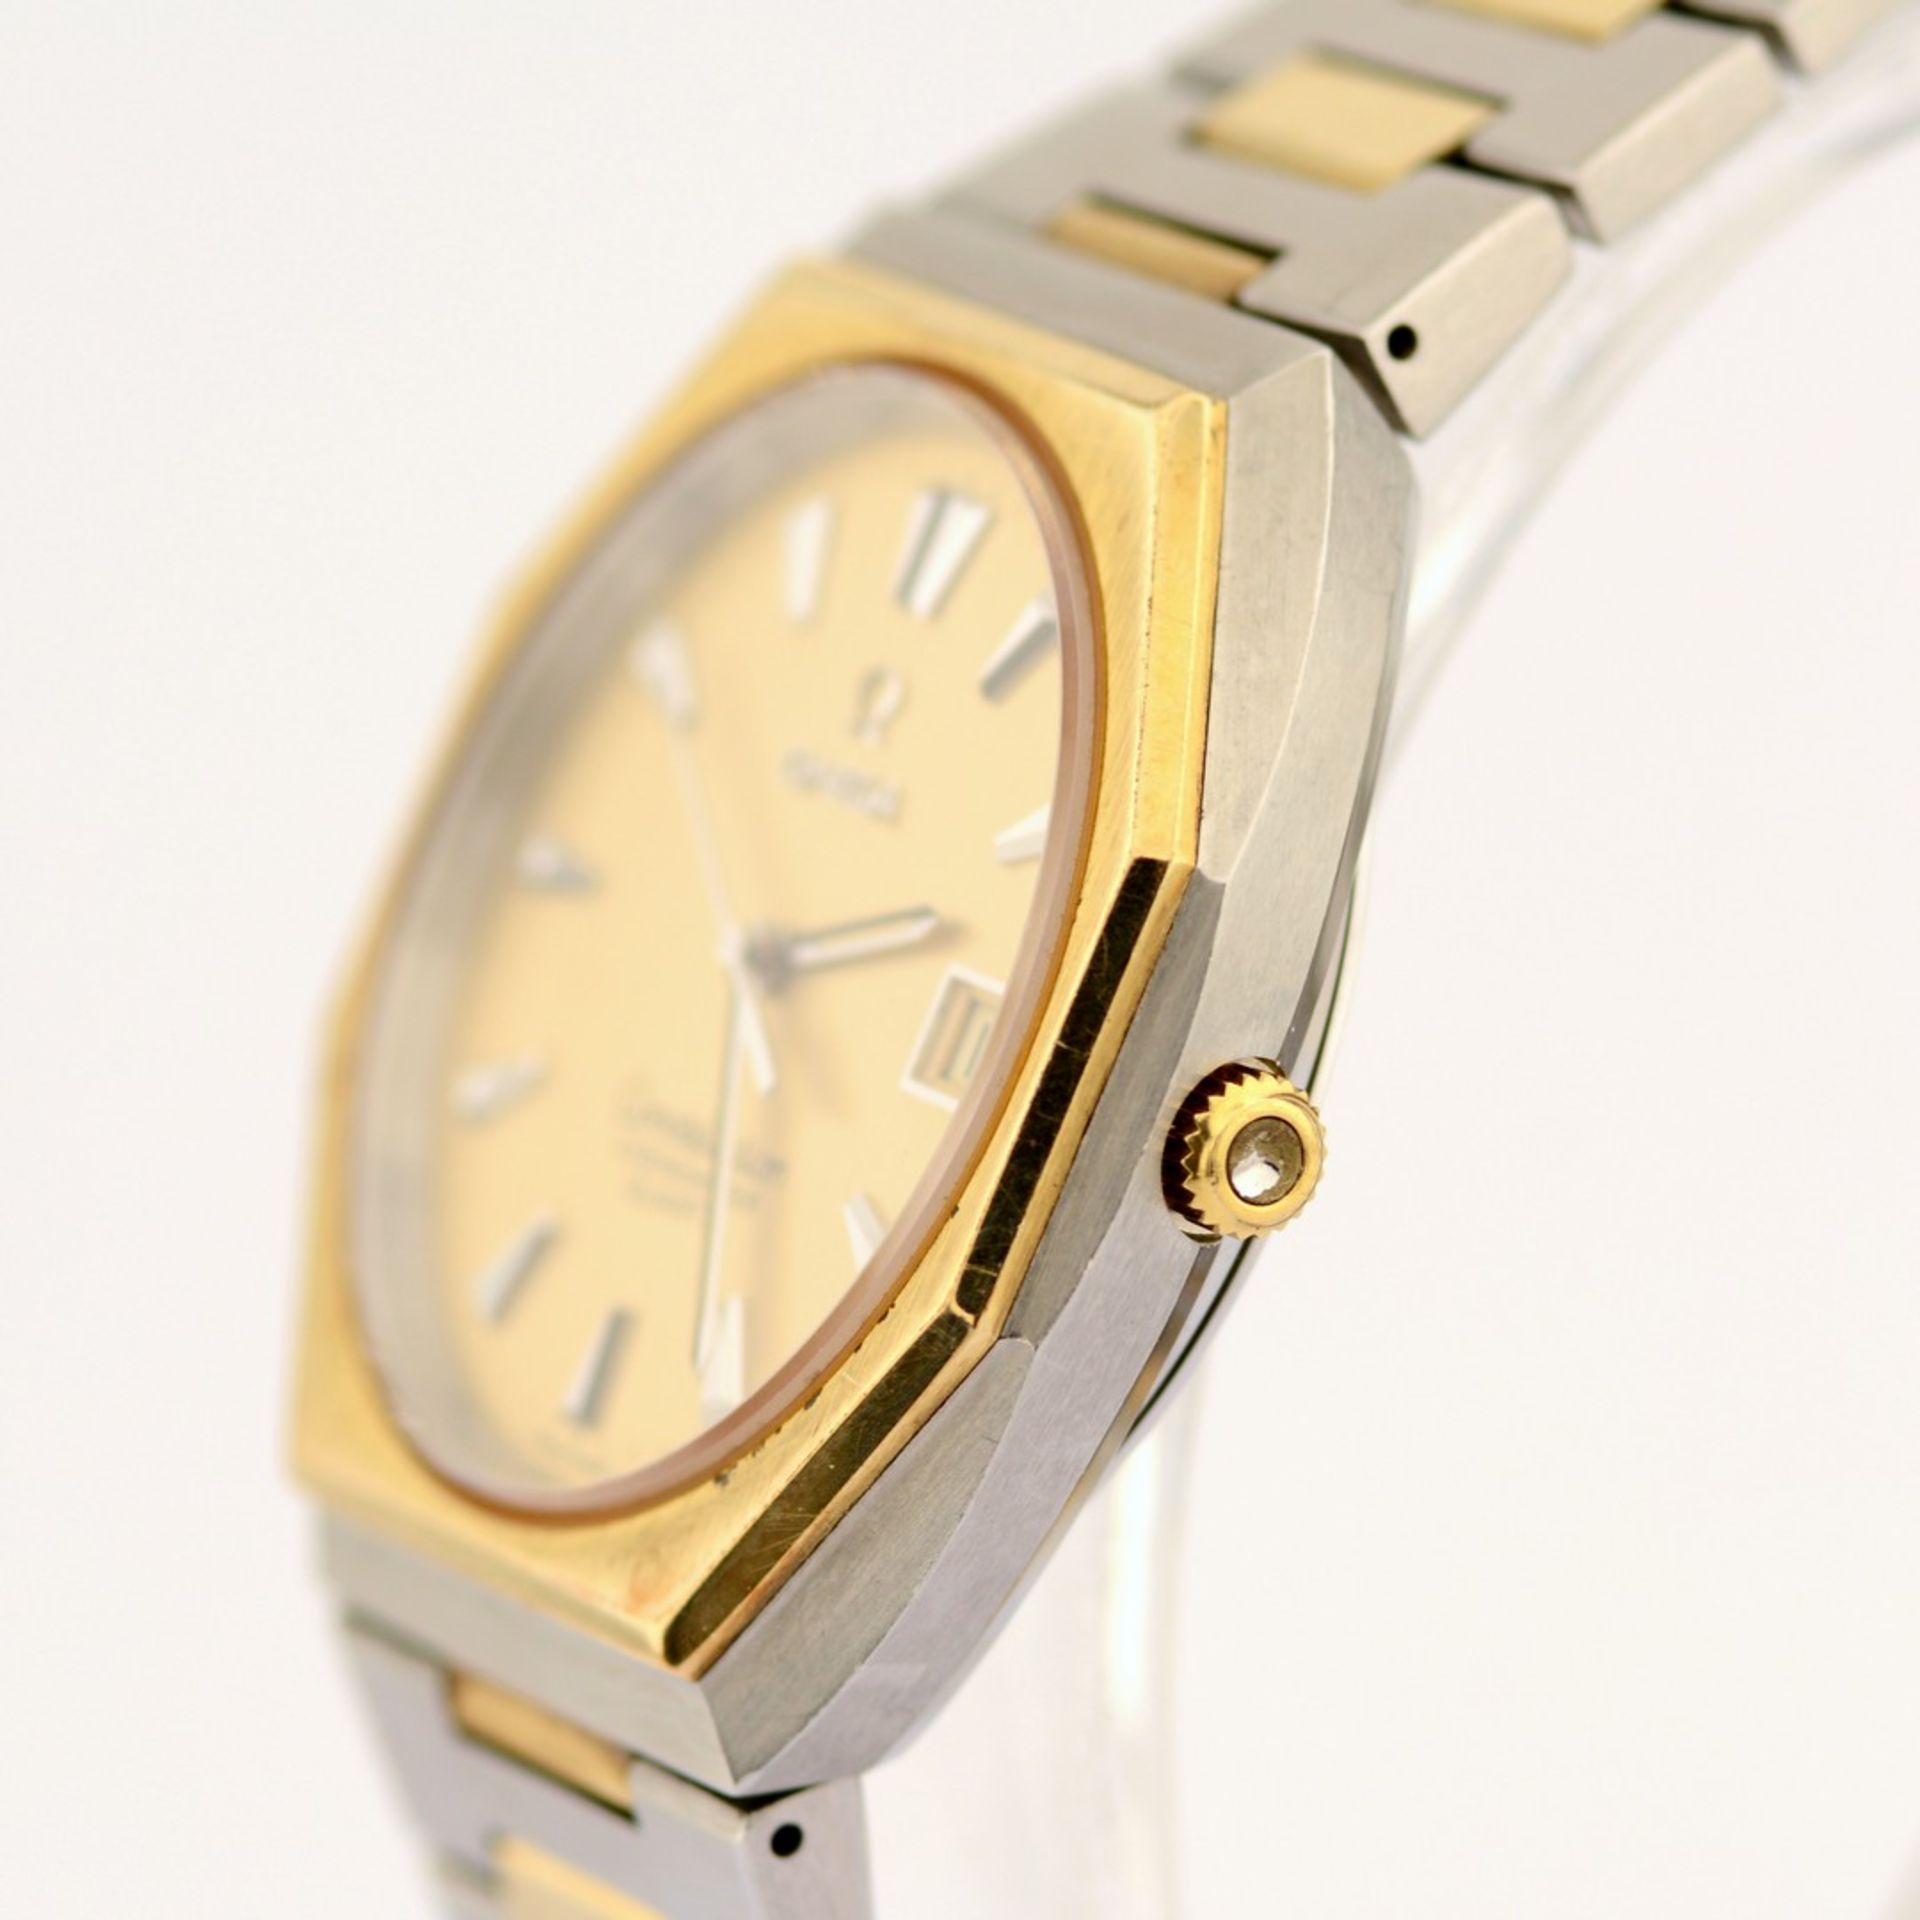 Omega / Constellation Chronometer - Gentlemen's Steel Wristwatch - Image 4 of 7